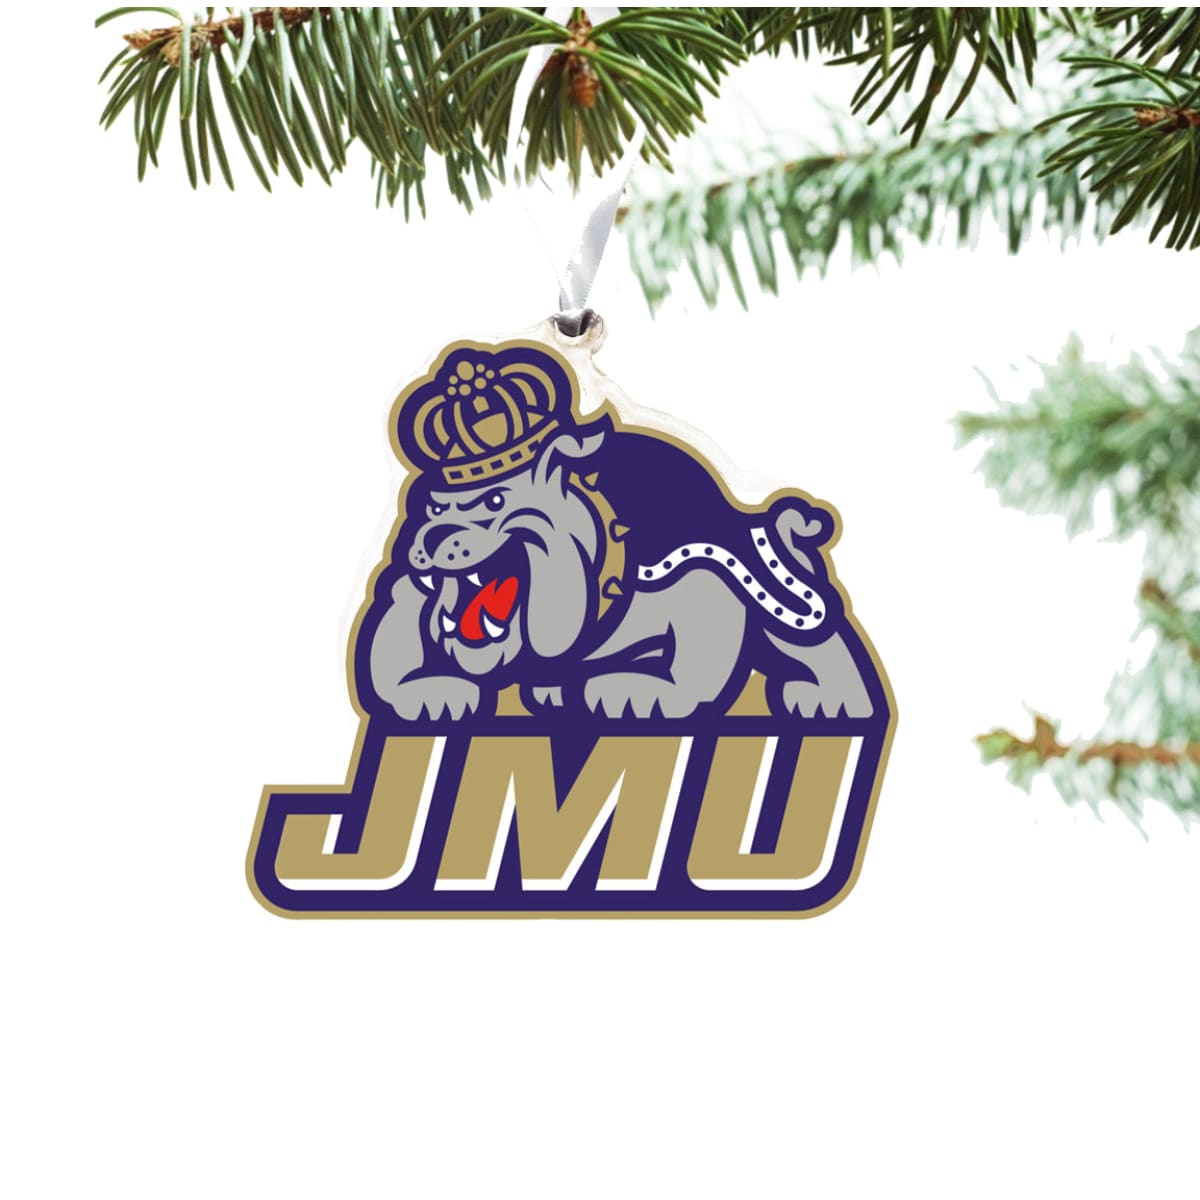 Acrylic JMU Christmas Ornaments - NEW DESIGNS AND ALL N